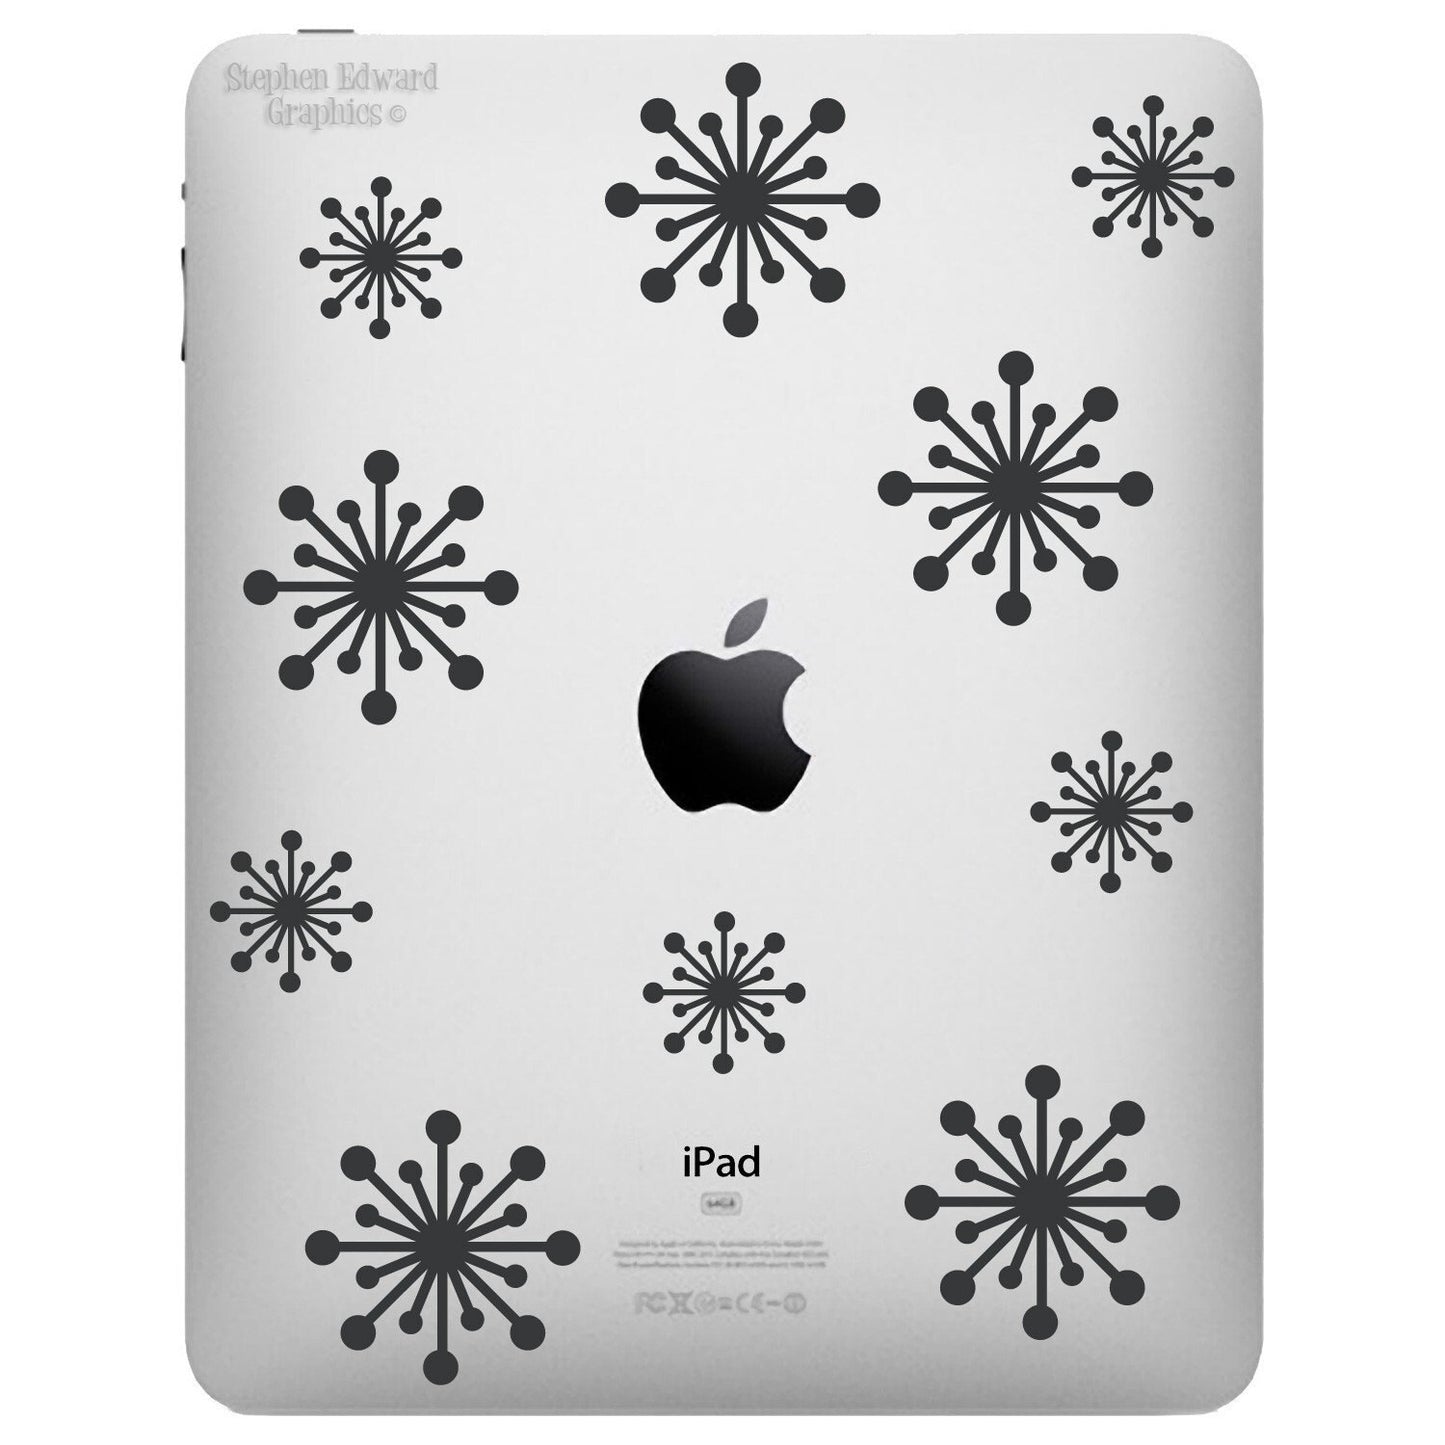 Fifties Starbursts iPad Decal - Apple iPad decal - Starburst Tablet Sticker